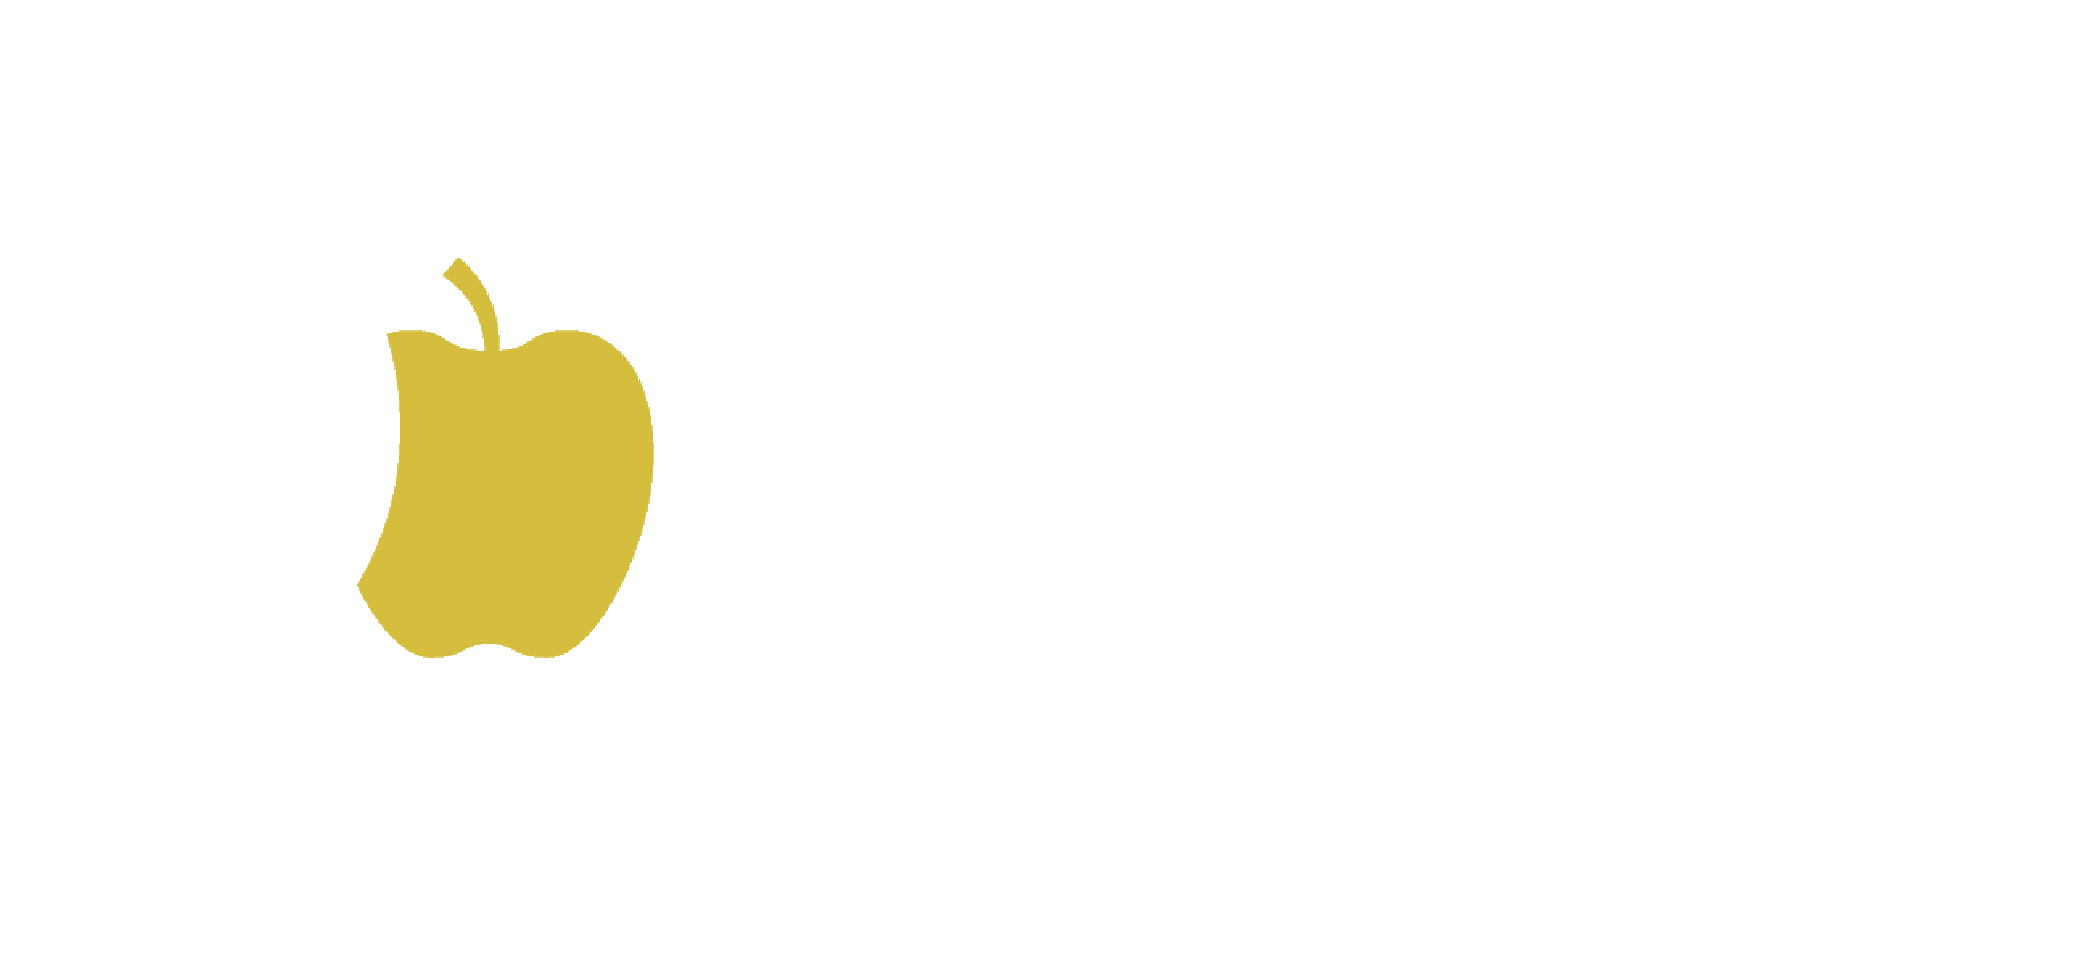 The Martinsburg Initiative